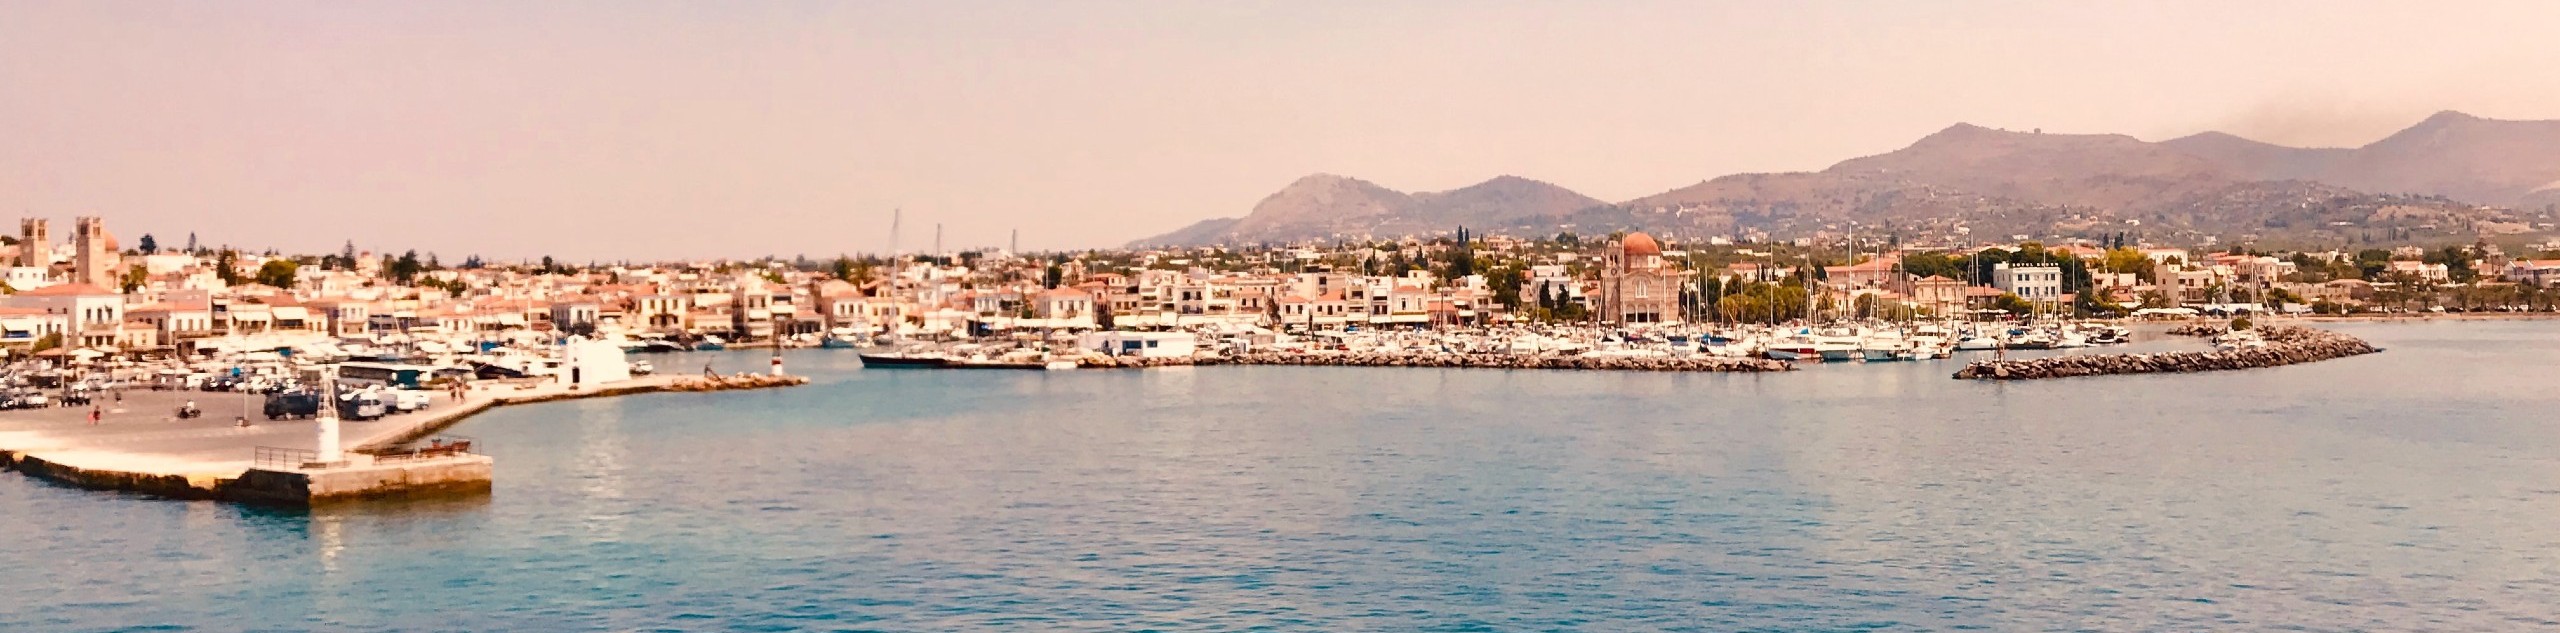 Aegina island in Greece views